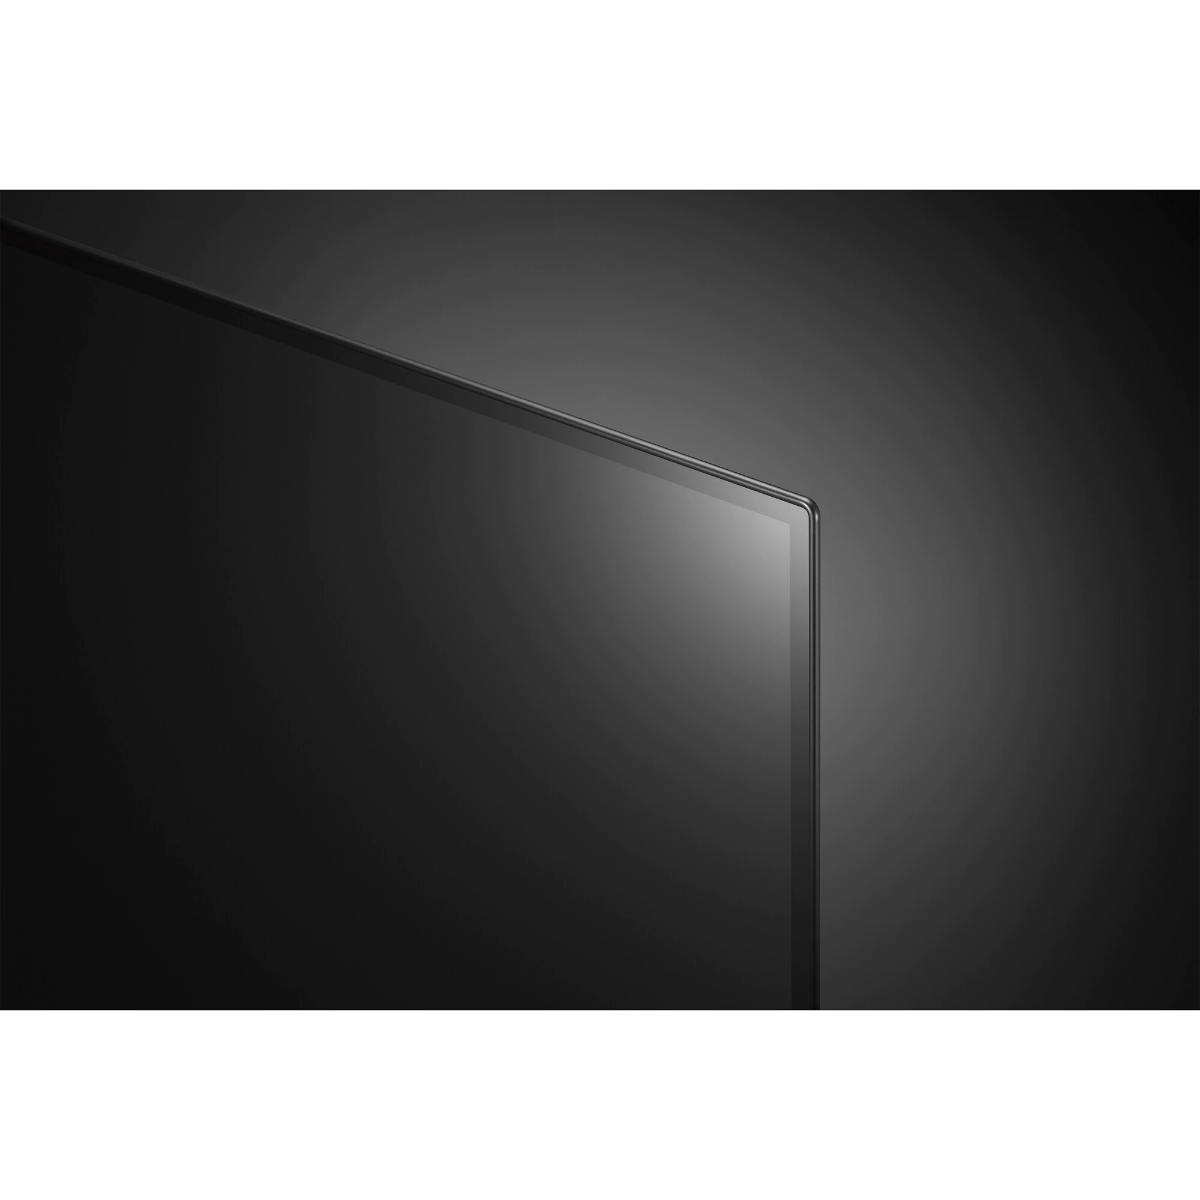 Televizor OLED Smart LG OLED65C11LB, 164 cm, 4K Ultra HD, Clasa G